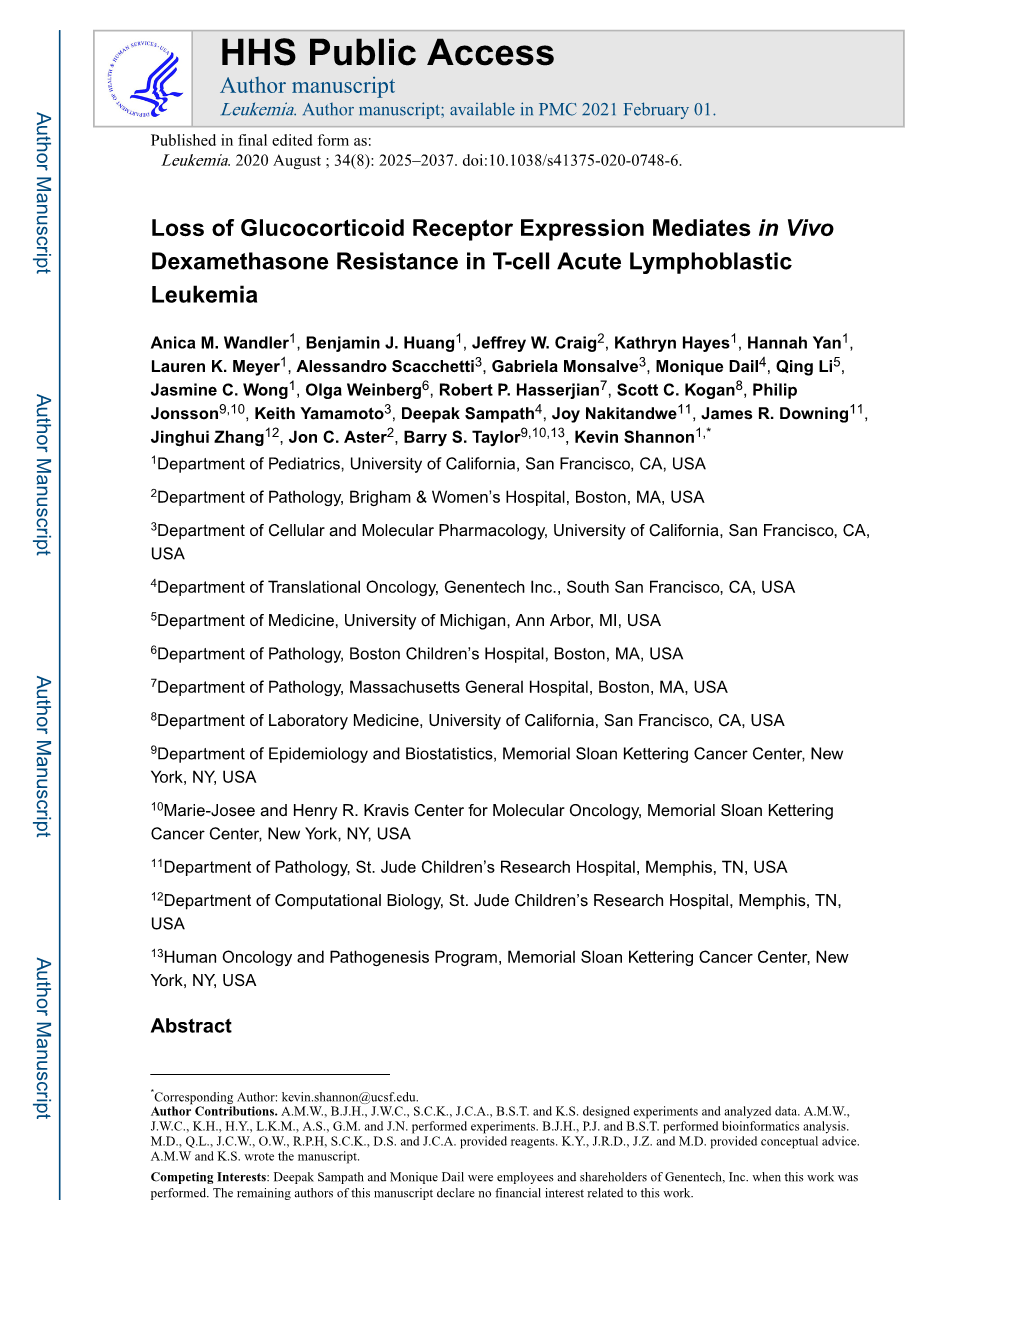 Loss of Glucocorticoid Receptor Expression Mediates in Vivo Dexamethasone Resistance in T-Cell Acute Lymphoblastic Leukemia